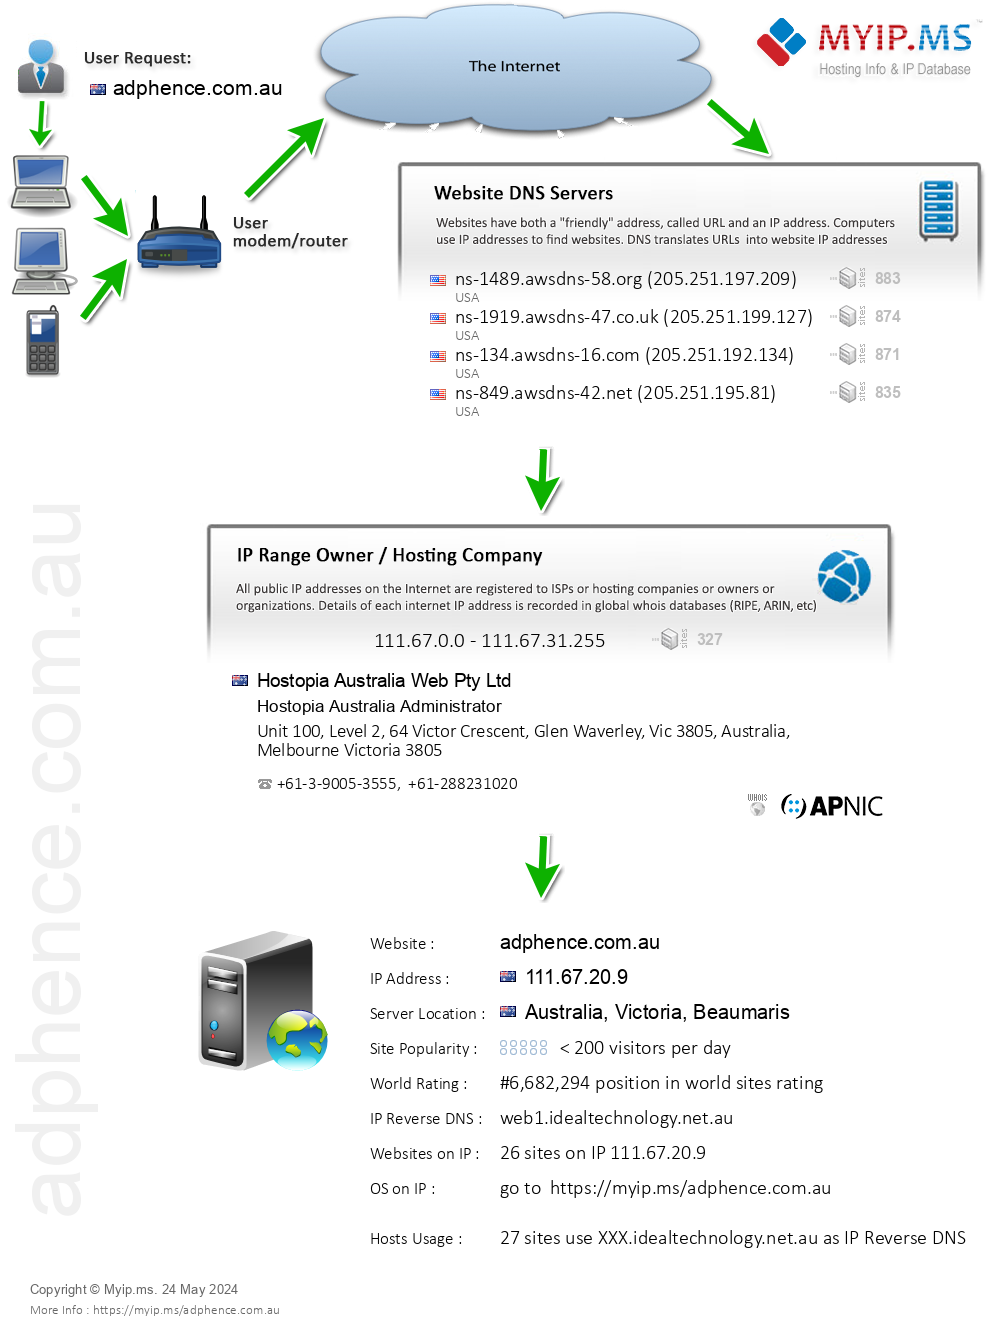 Adphence.com.au - Website Hosting Visual IP Diagram